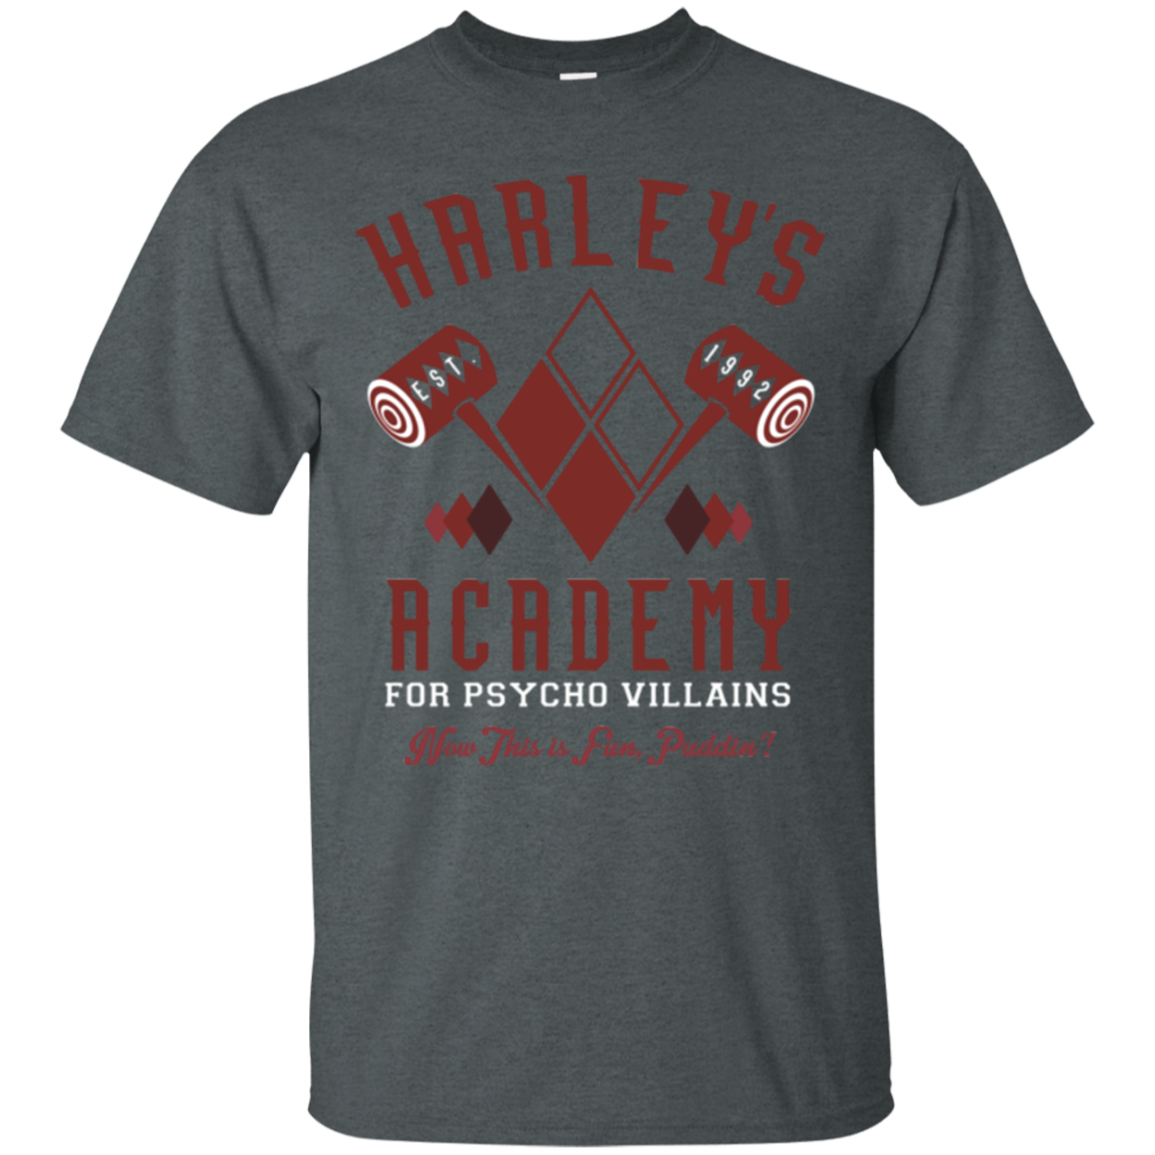 Harley's Academy T-Shirt